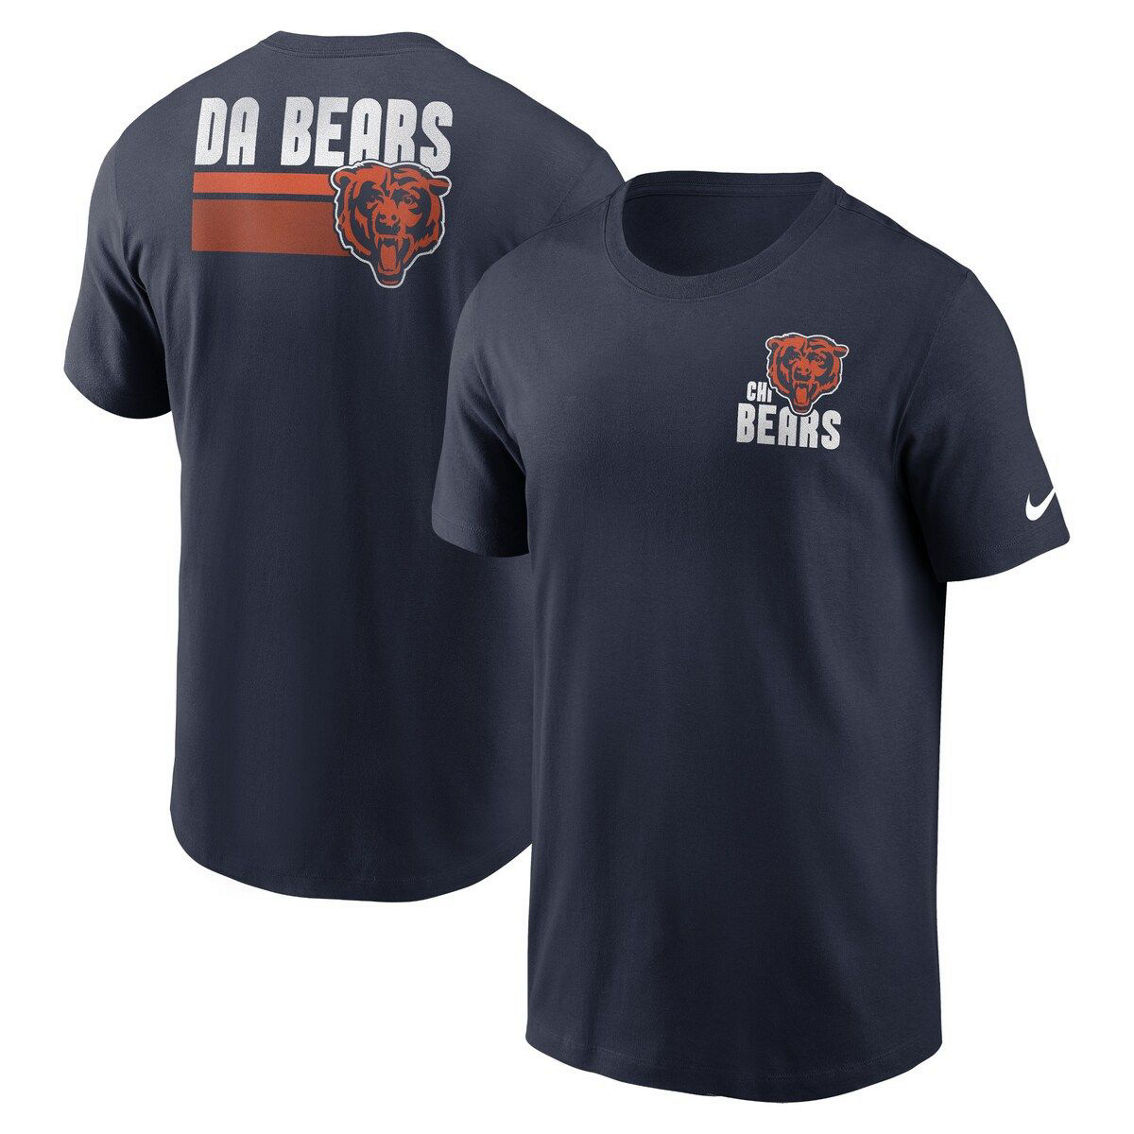 Nike Men's Navy Chicago Bears Blitz Essential T-Shirt - Image 2 of 4